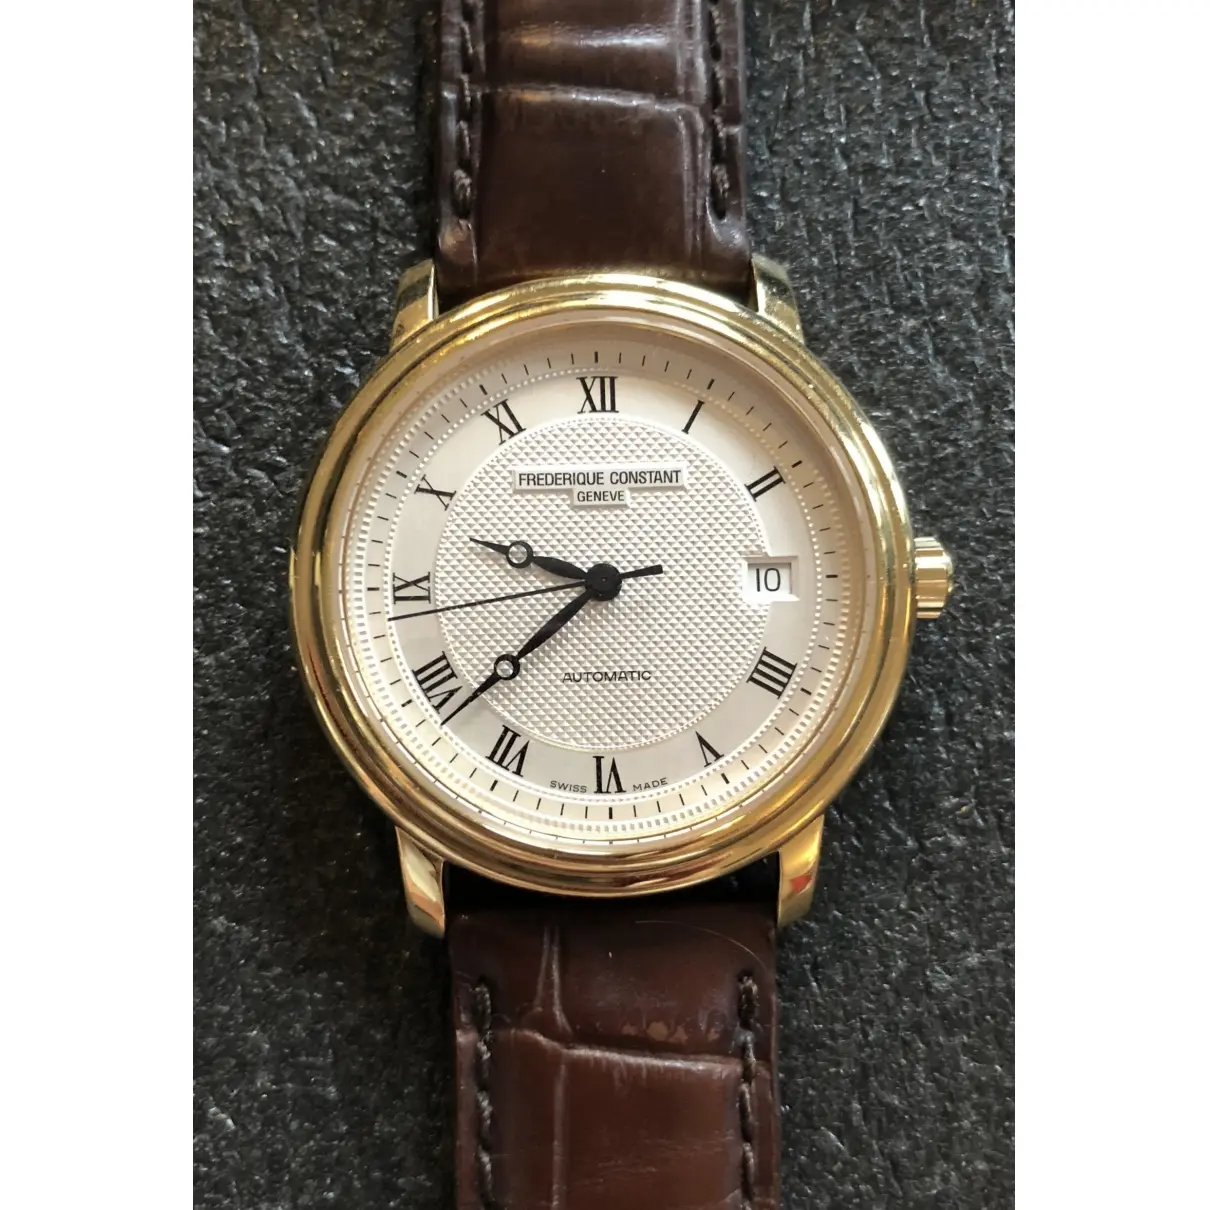 Buy Frederique Constant Classic watch online